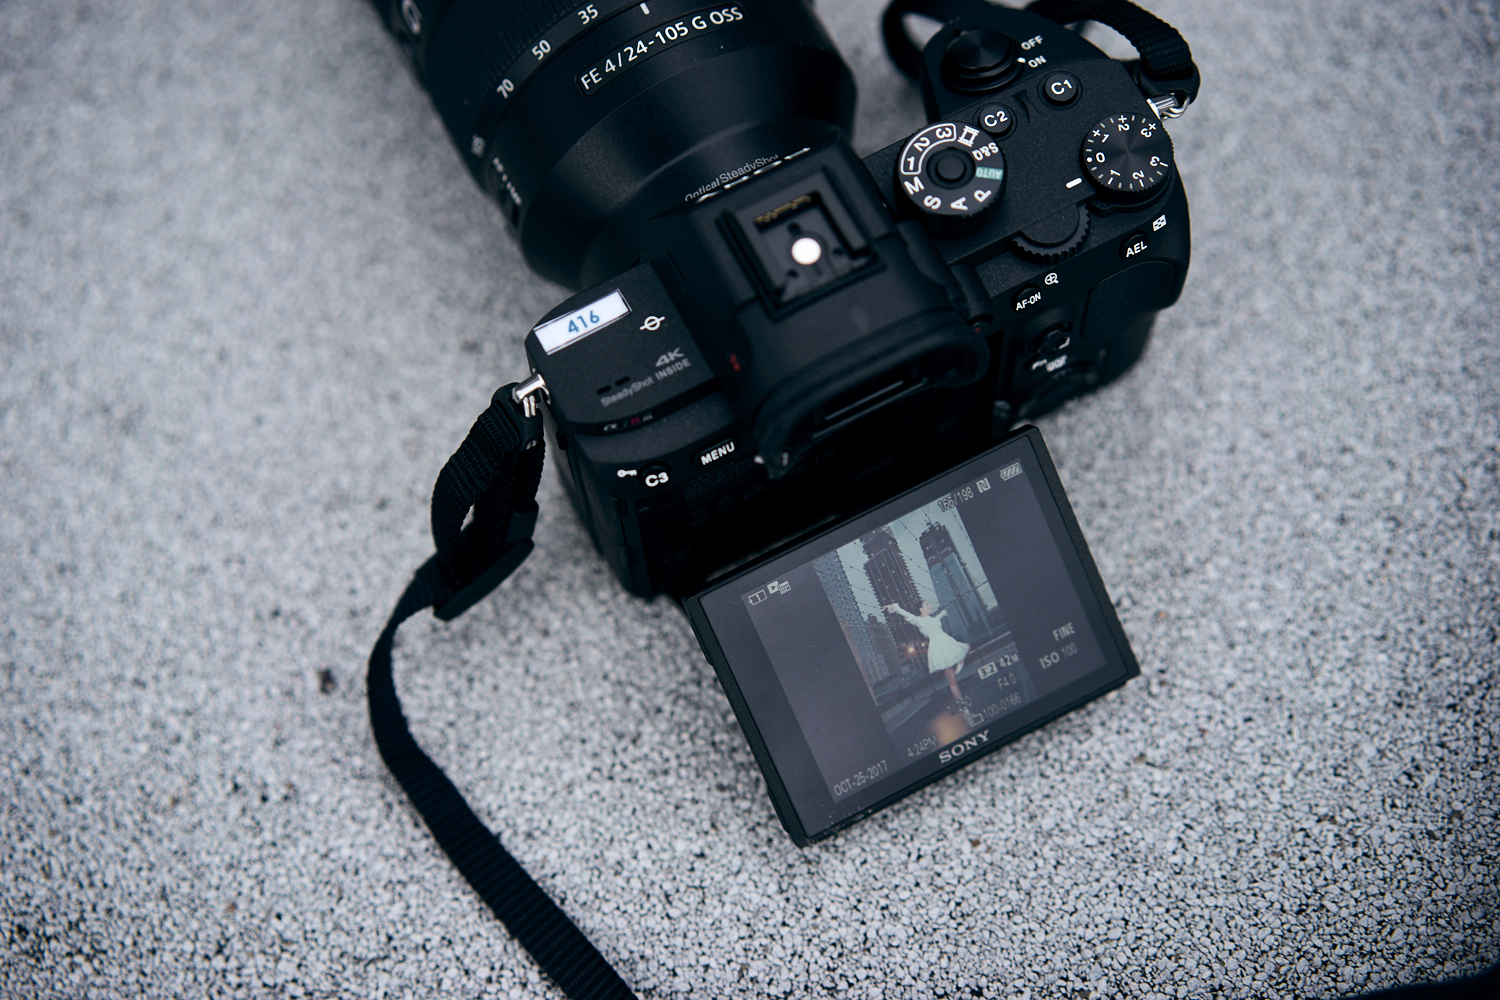 Sony A7R III review  Digital Camera World